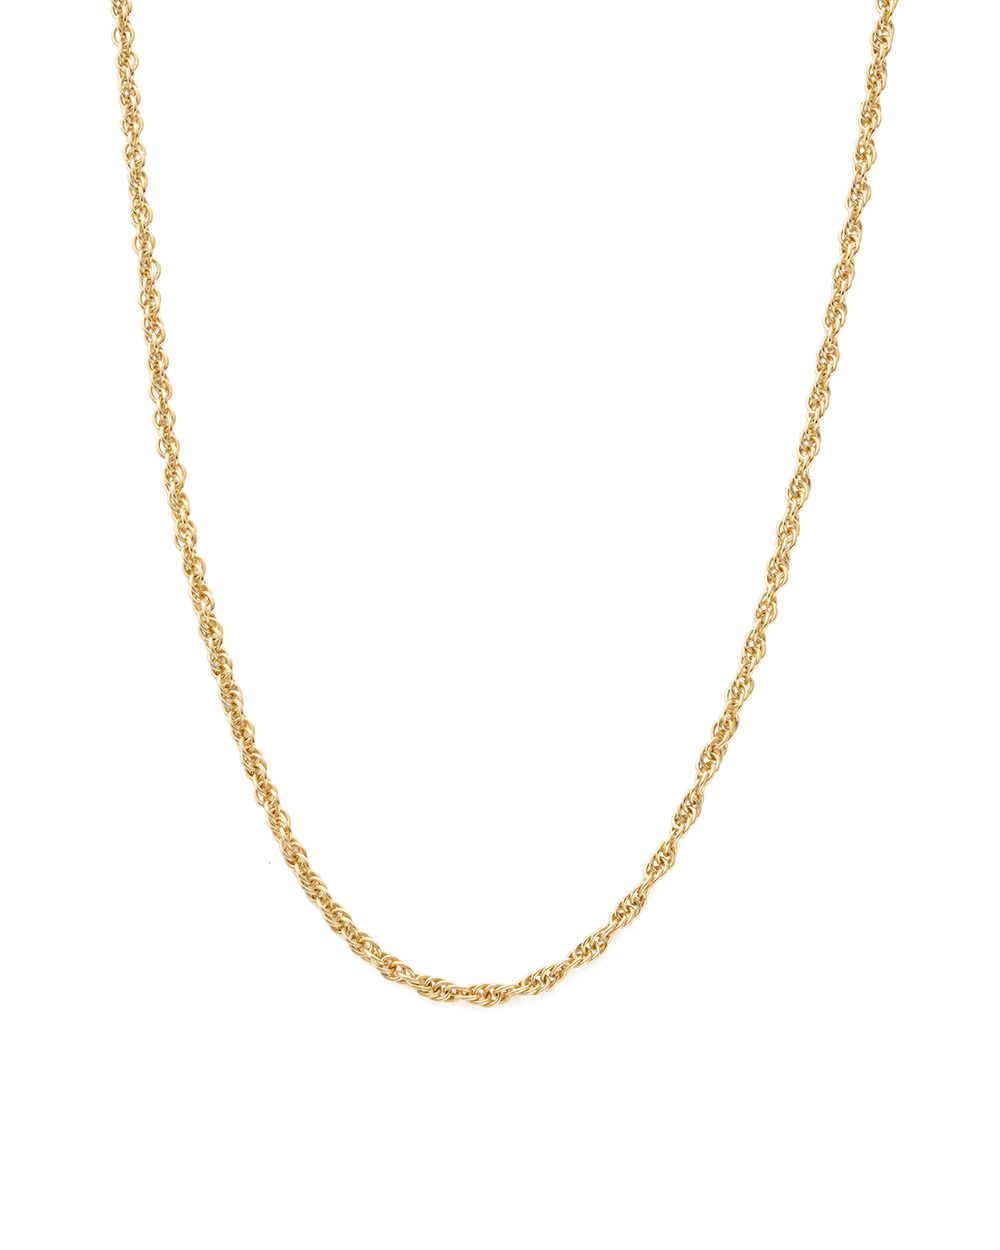 Kirstin Ash Horizon Chain Necklace- 18k gold plated